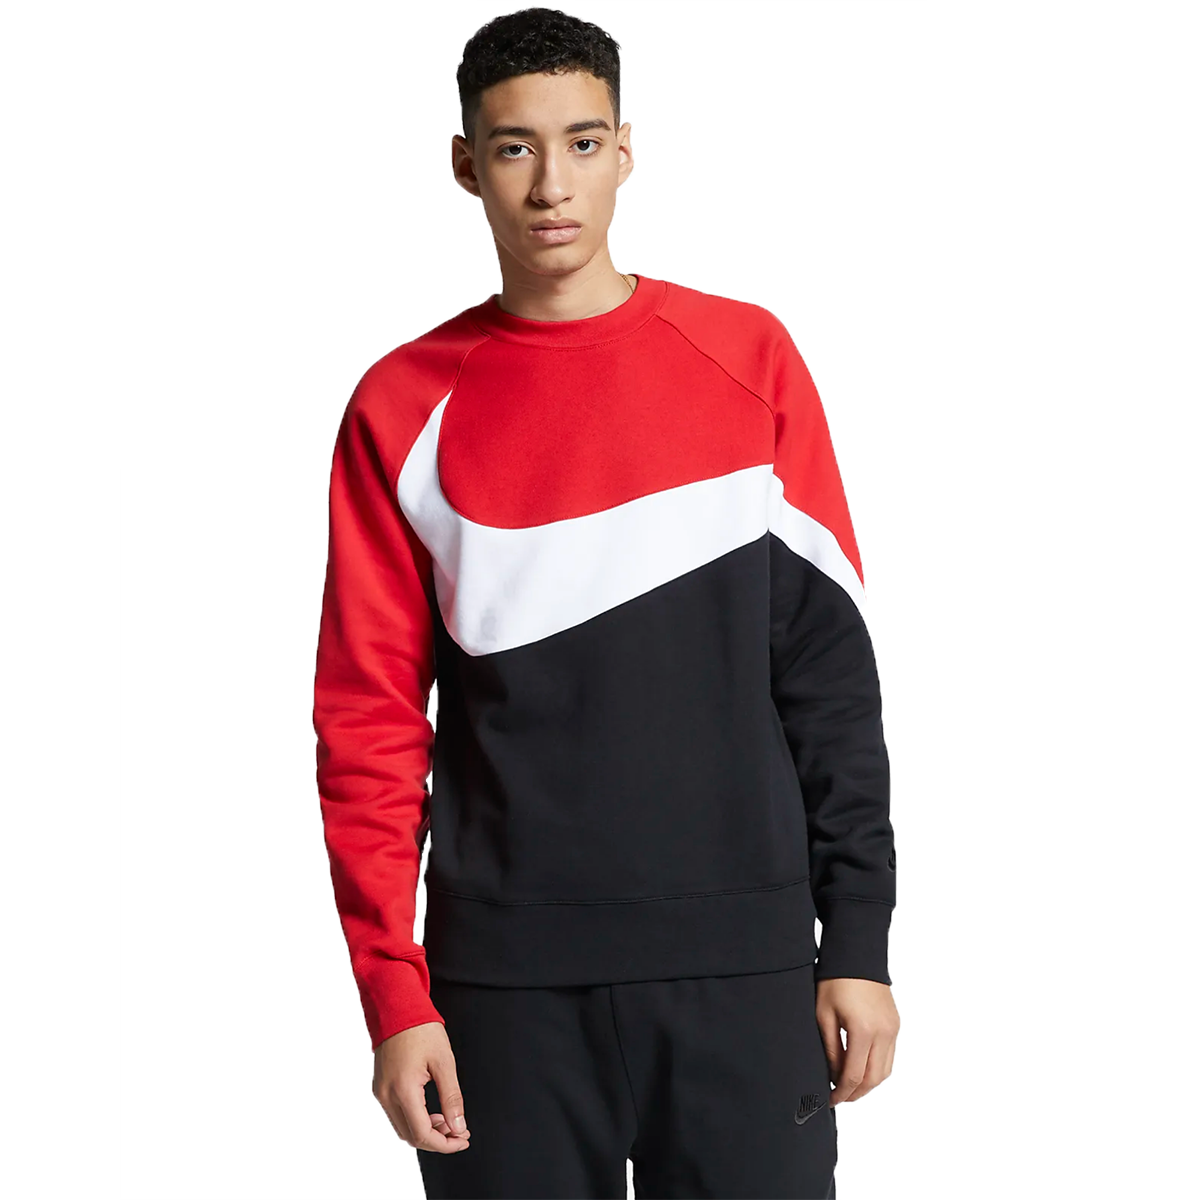 Nike Sportwear HBR Swoosh Crew Men's Sweatshirt Red-Black BQ6461-657 | eBay